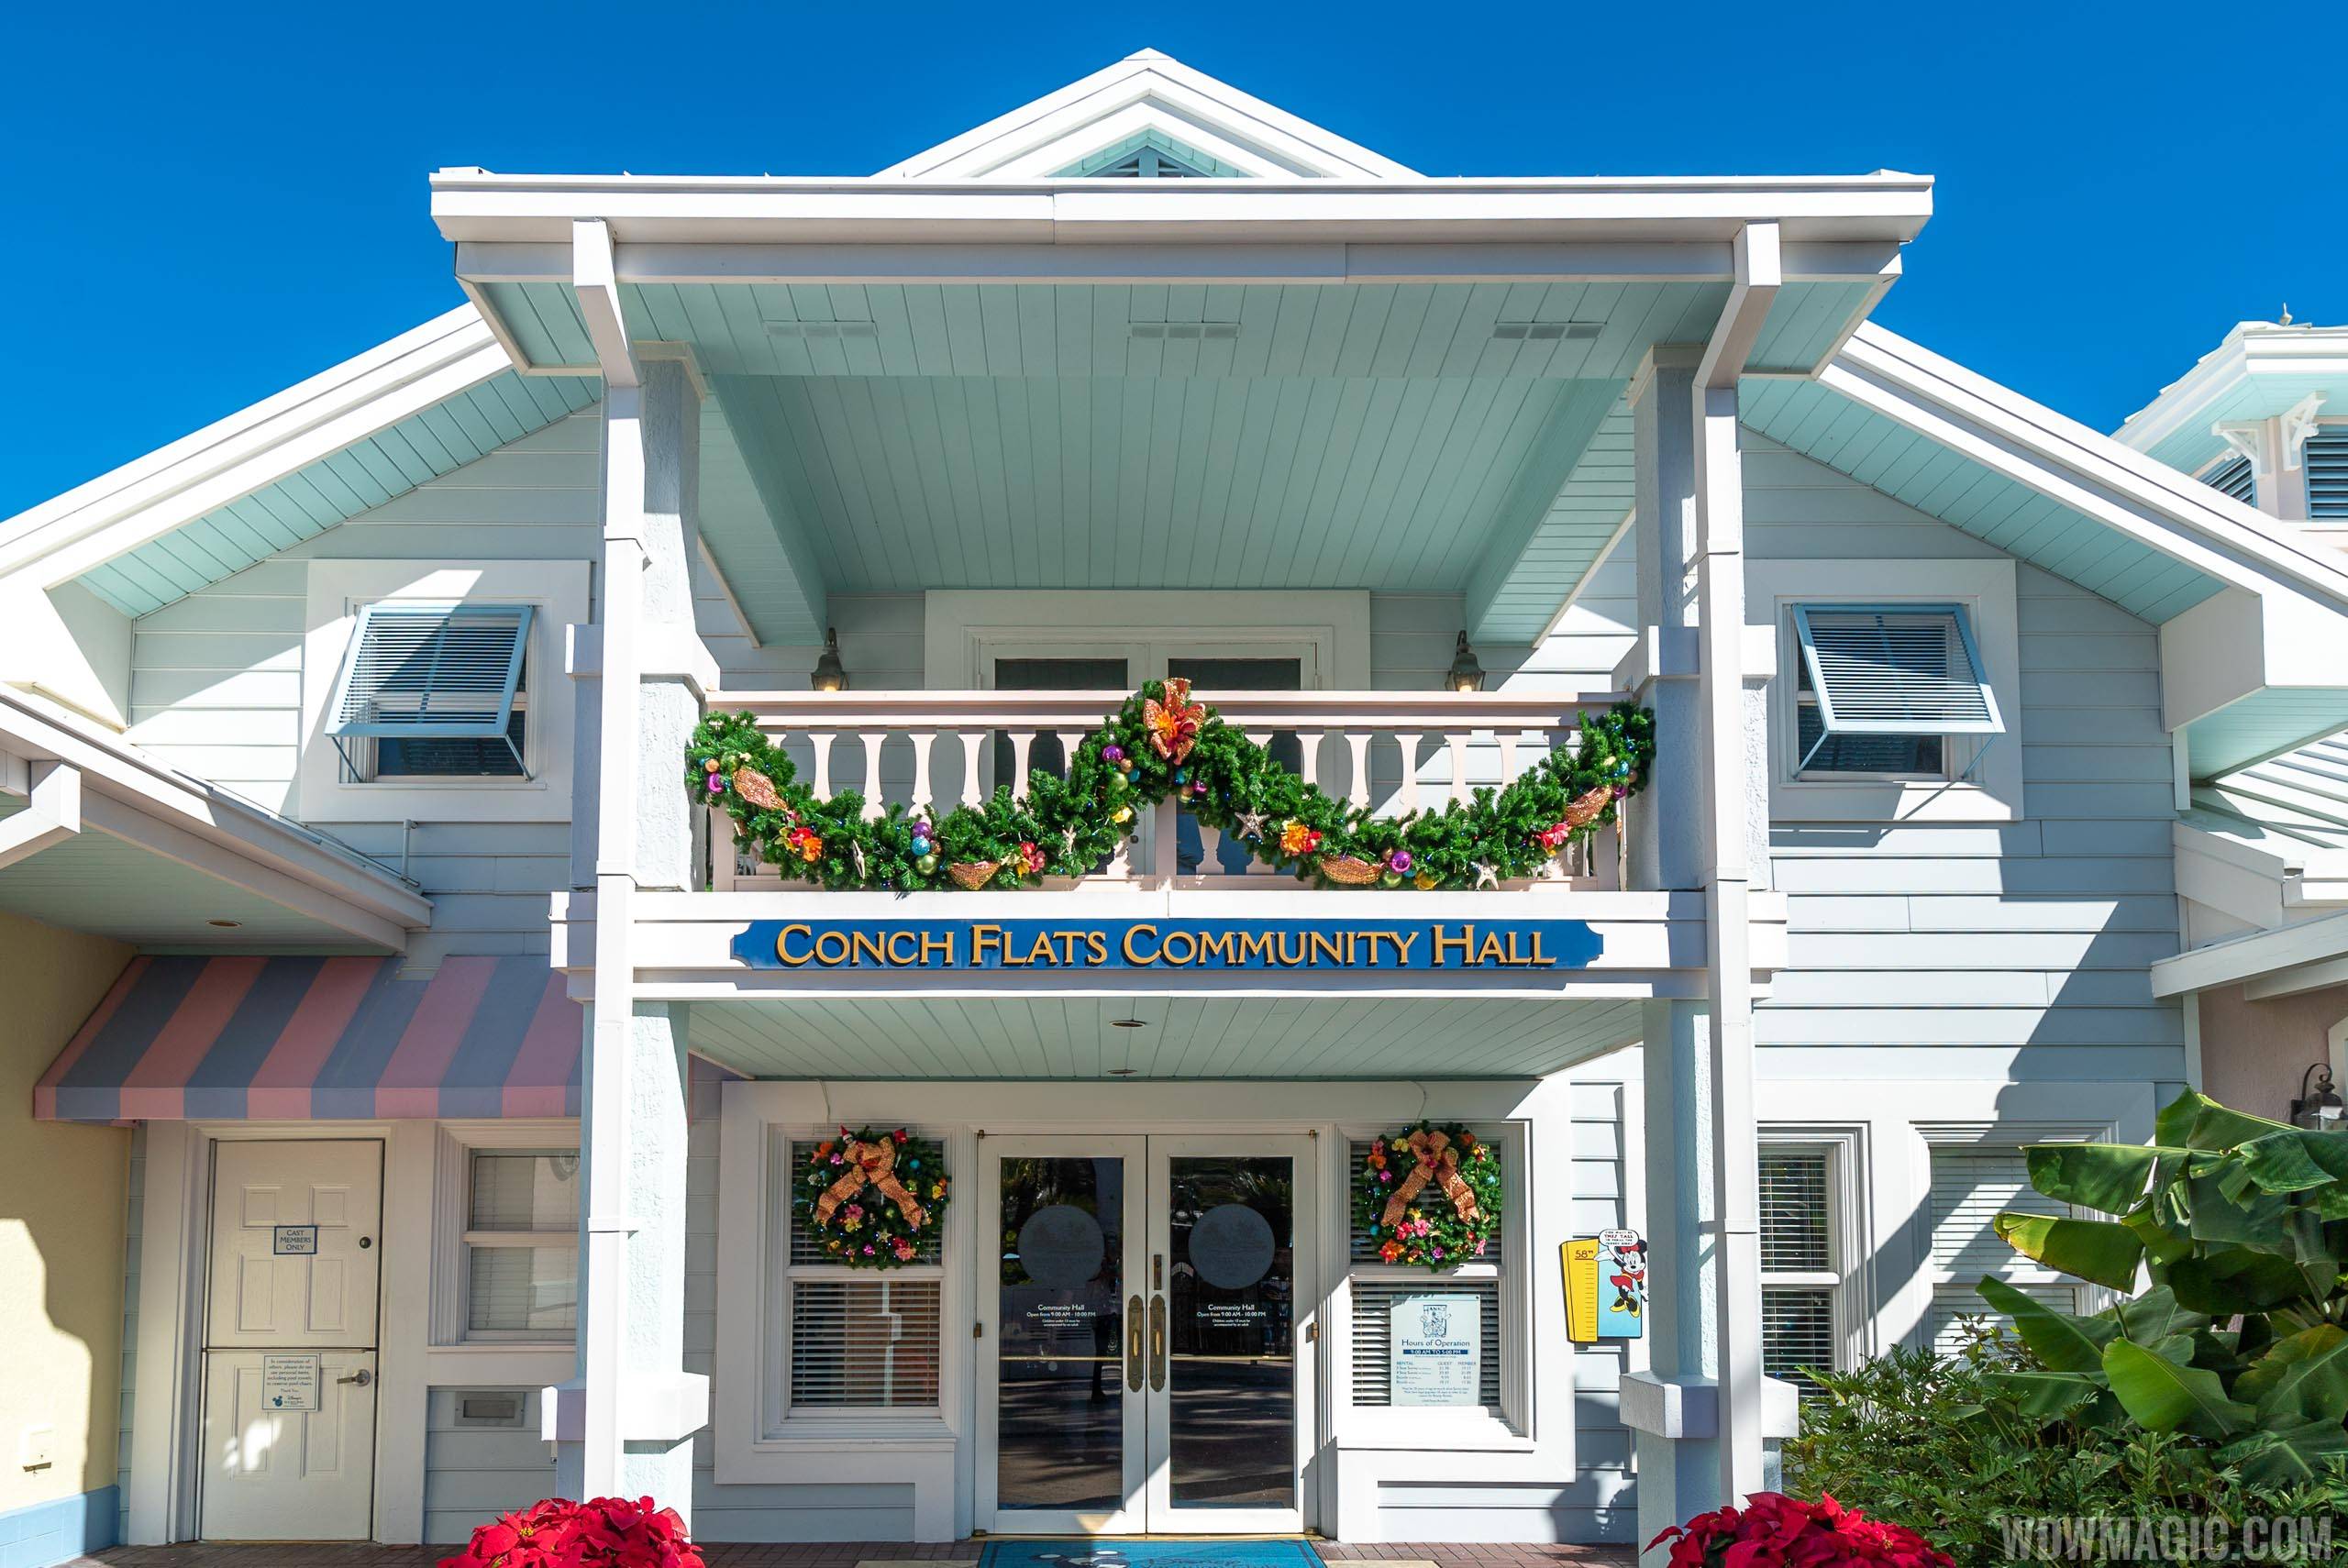 Disney's Old Key West Resort Christmas Holiday Decor 2019